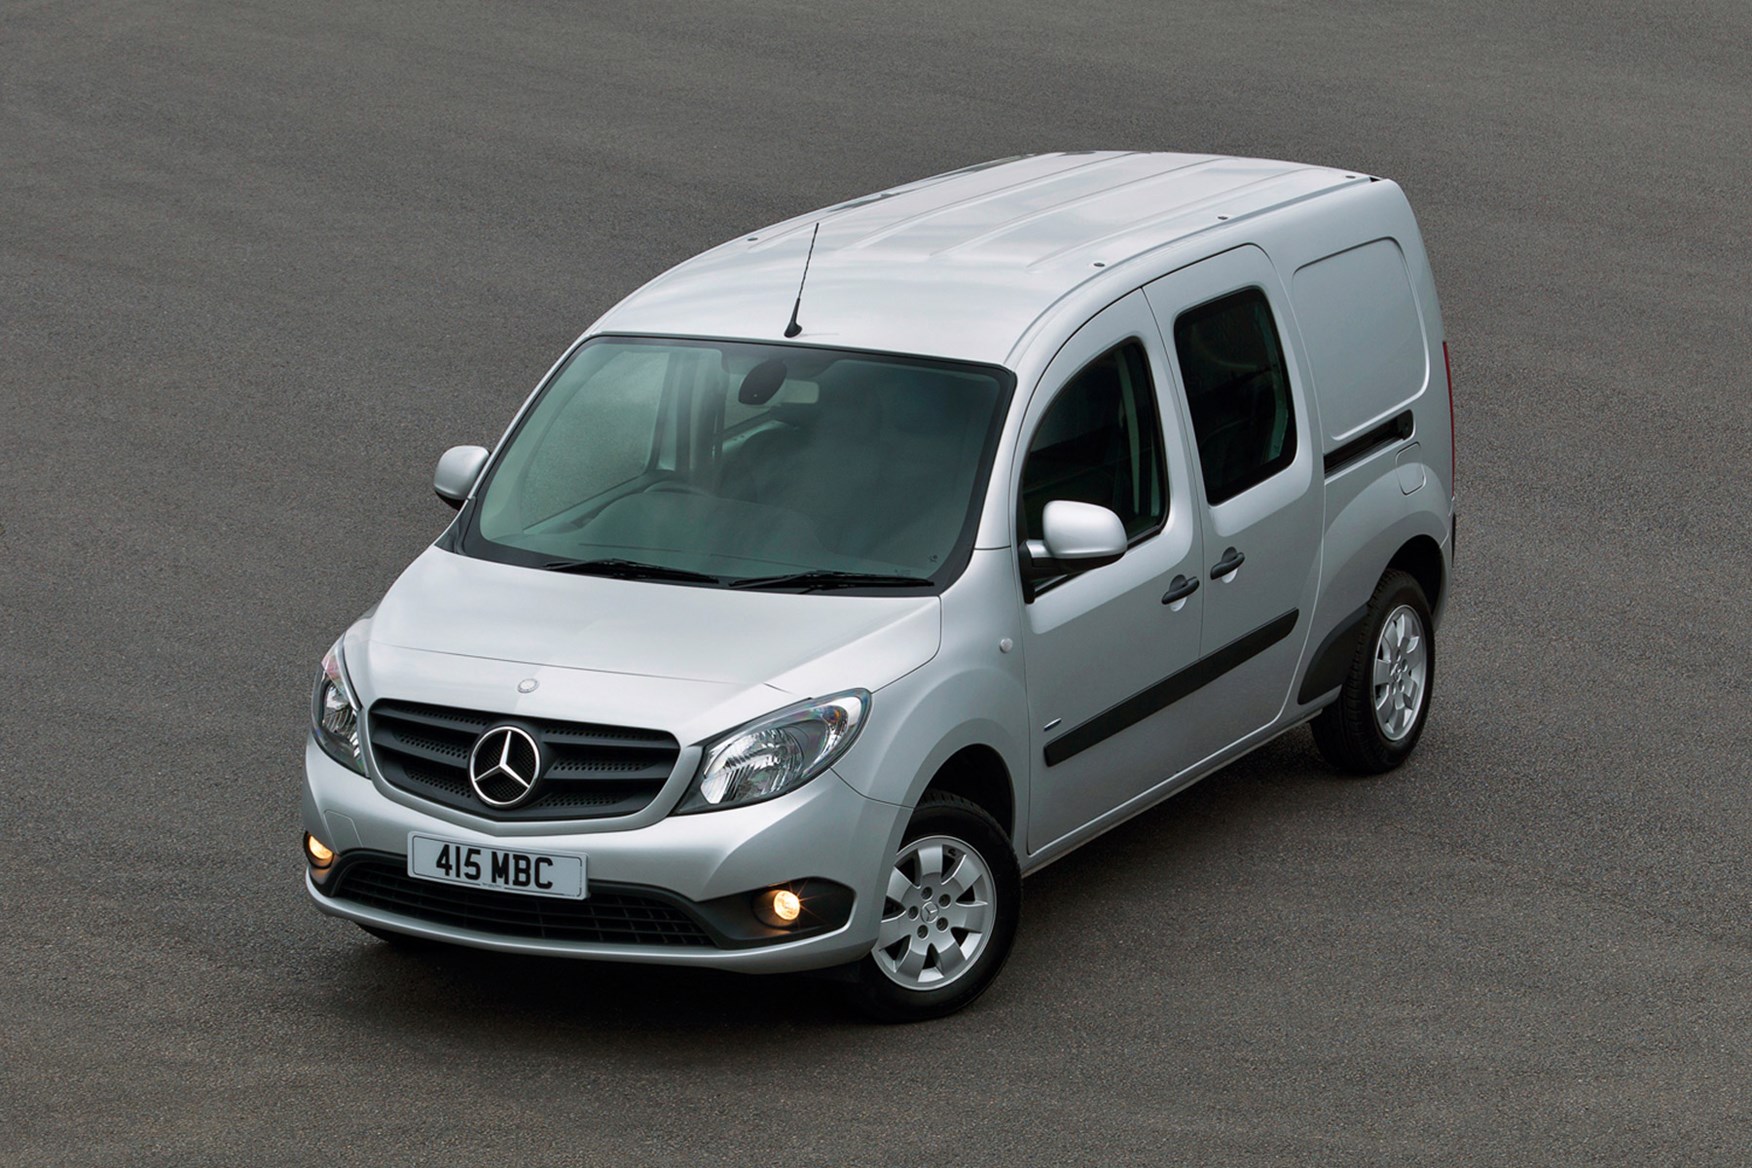 Mercedes-Benz Citan full review on Parkers Vans - over-head